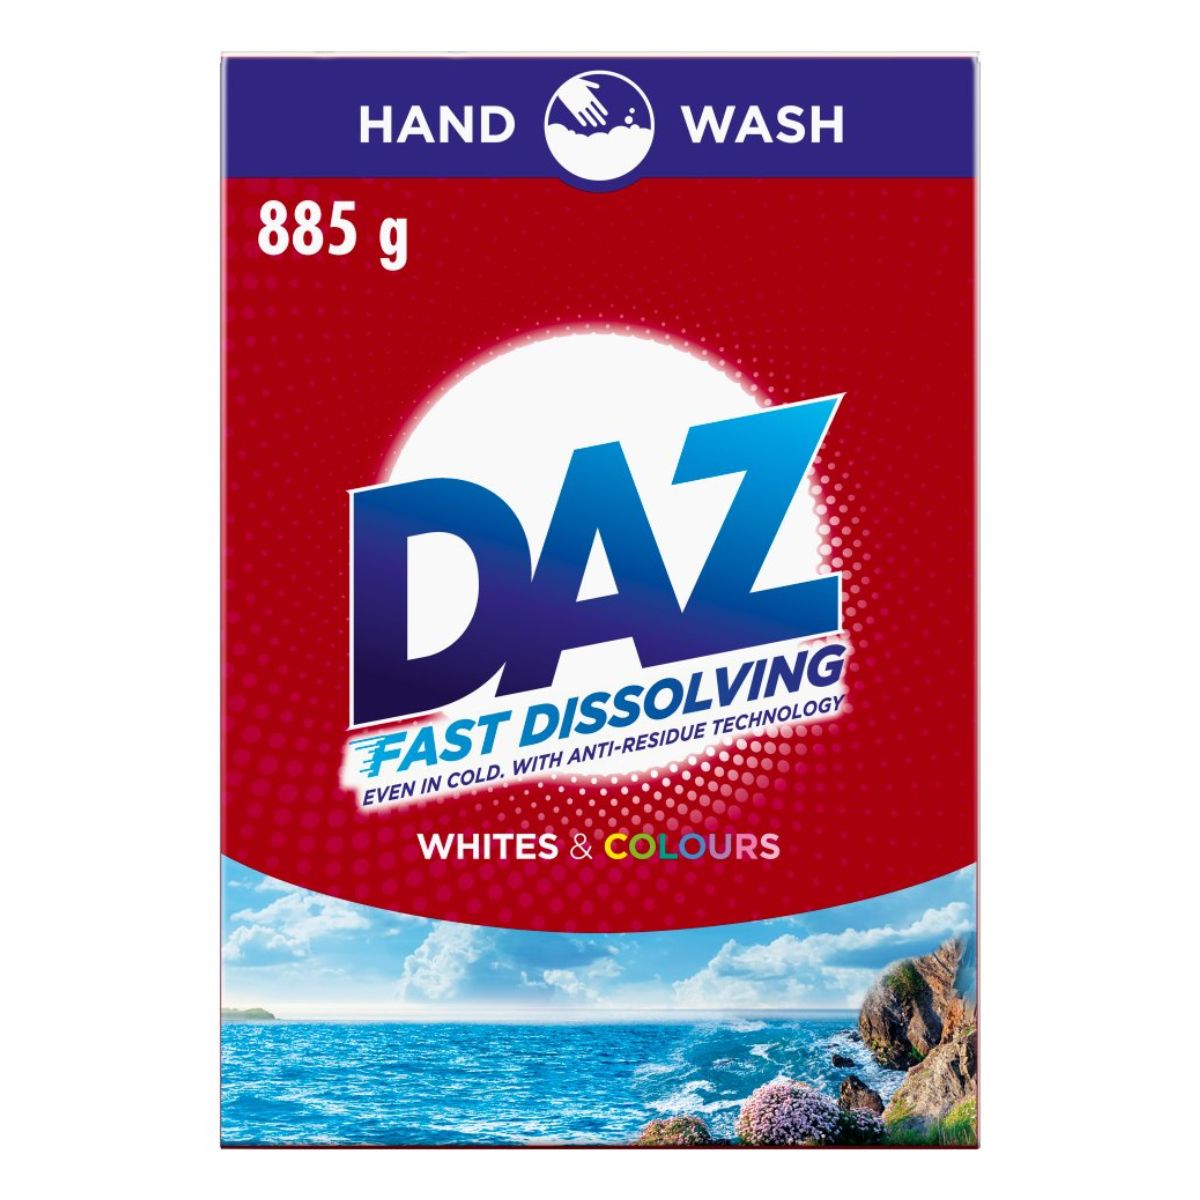 DAZ fast dissolving washing powder.